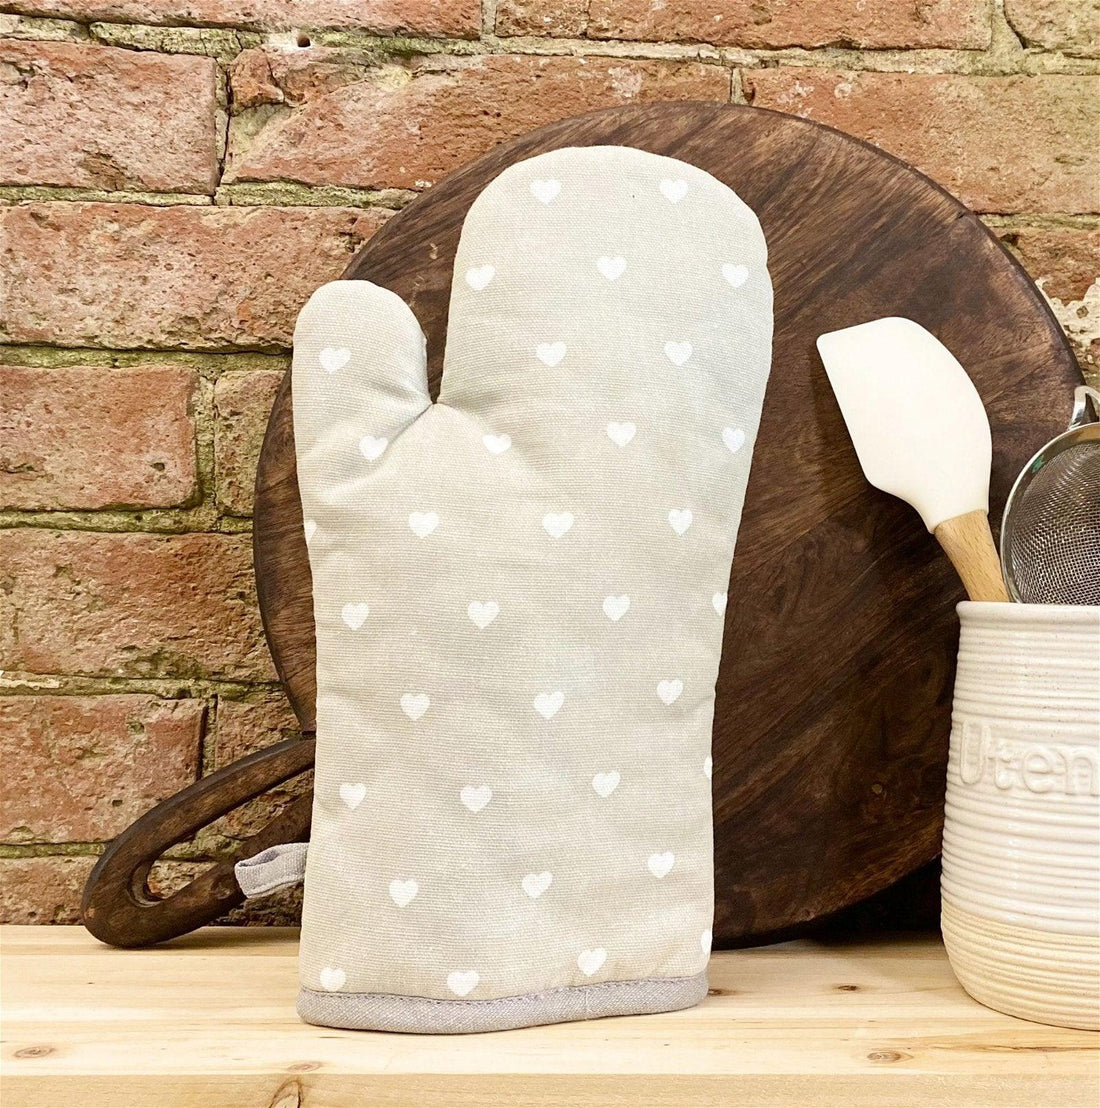 Kitchen Oven Glove With A Grey Heart Print Design - £15.99 - Decorative Kitchen Items 